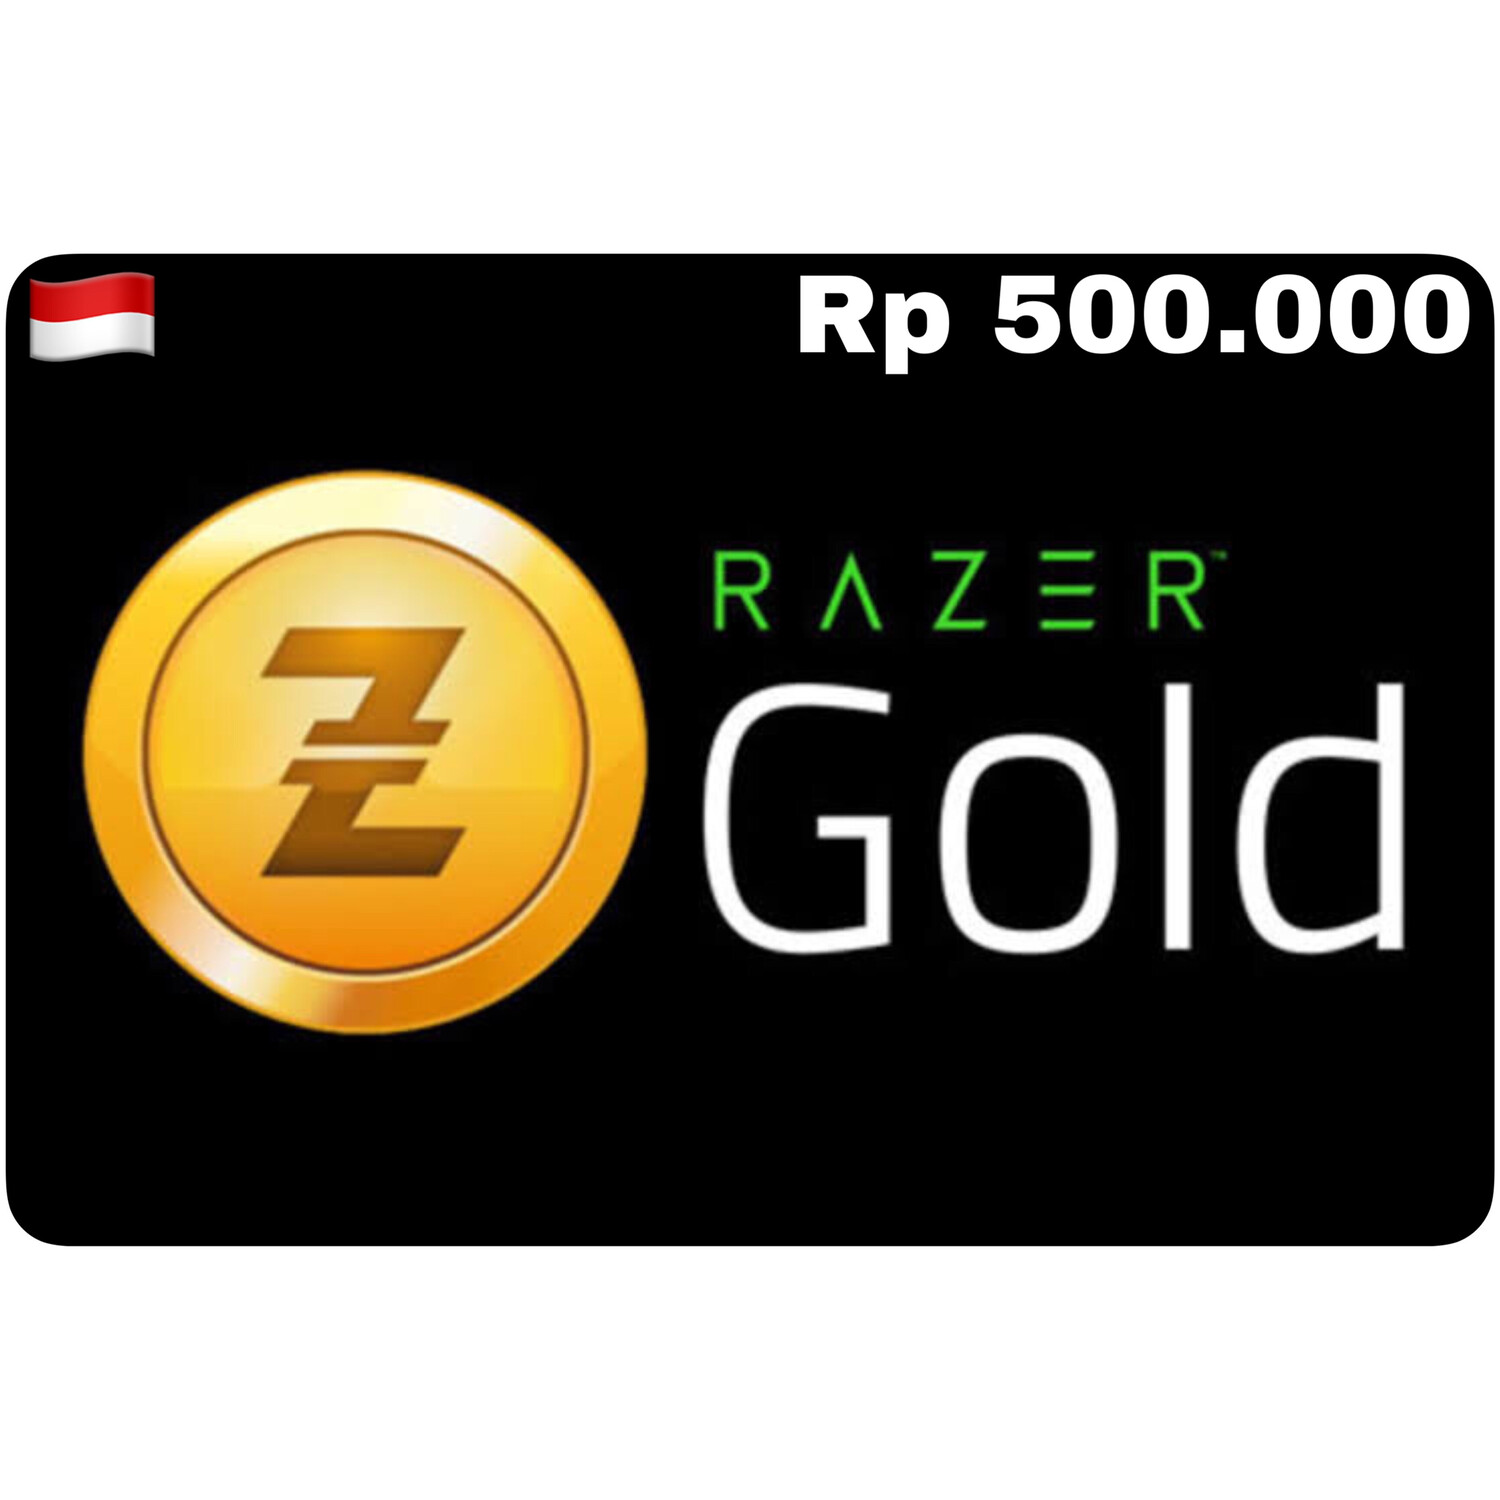 Razer Gold Pin ID Rp 500.000